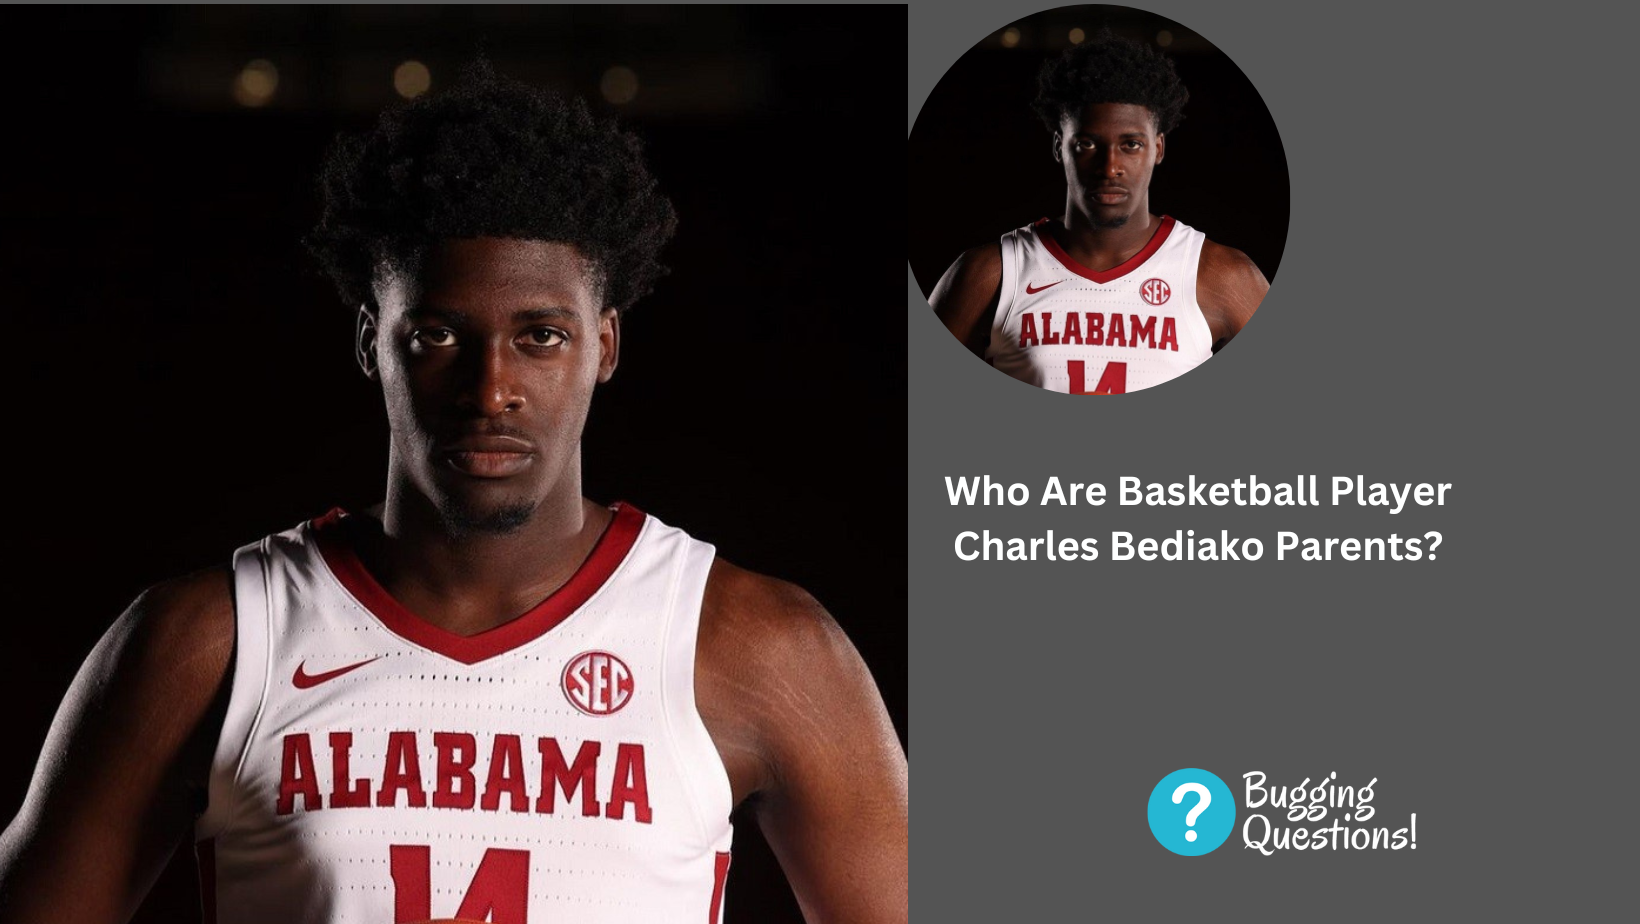 Who Are Basketball Player Charles Bediako Parents?